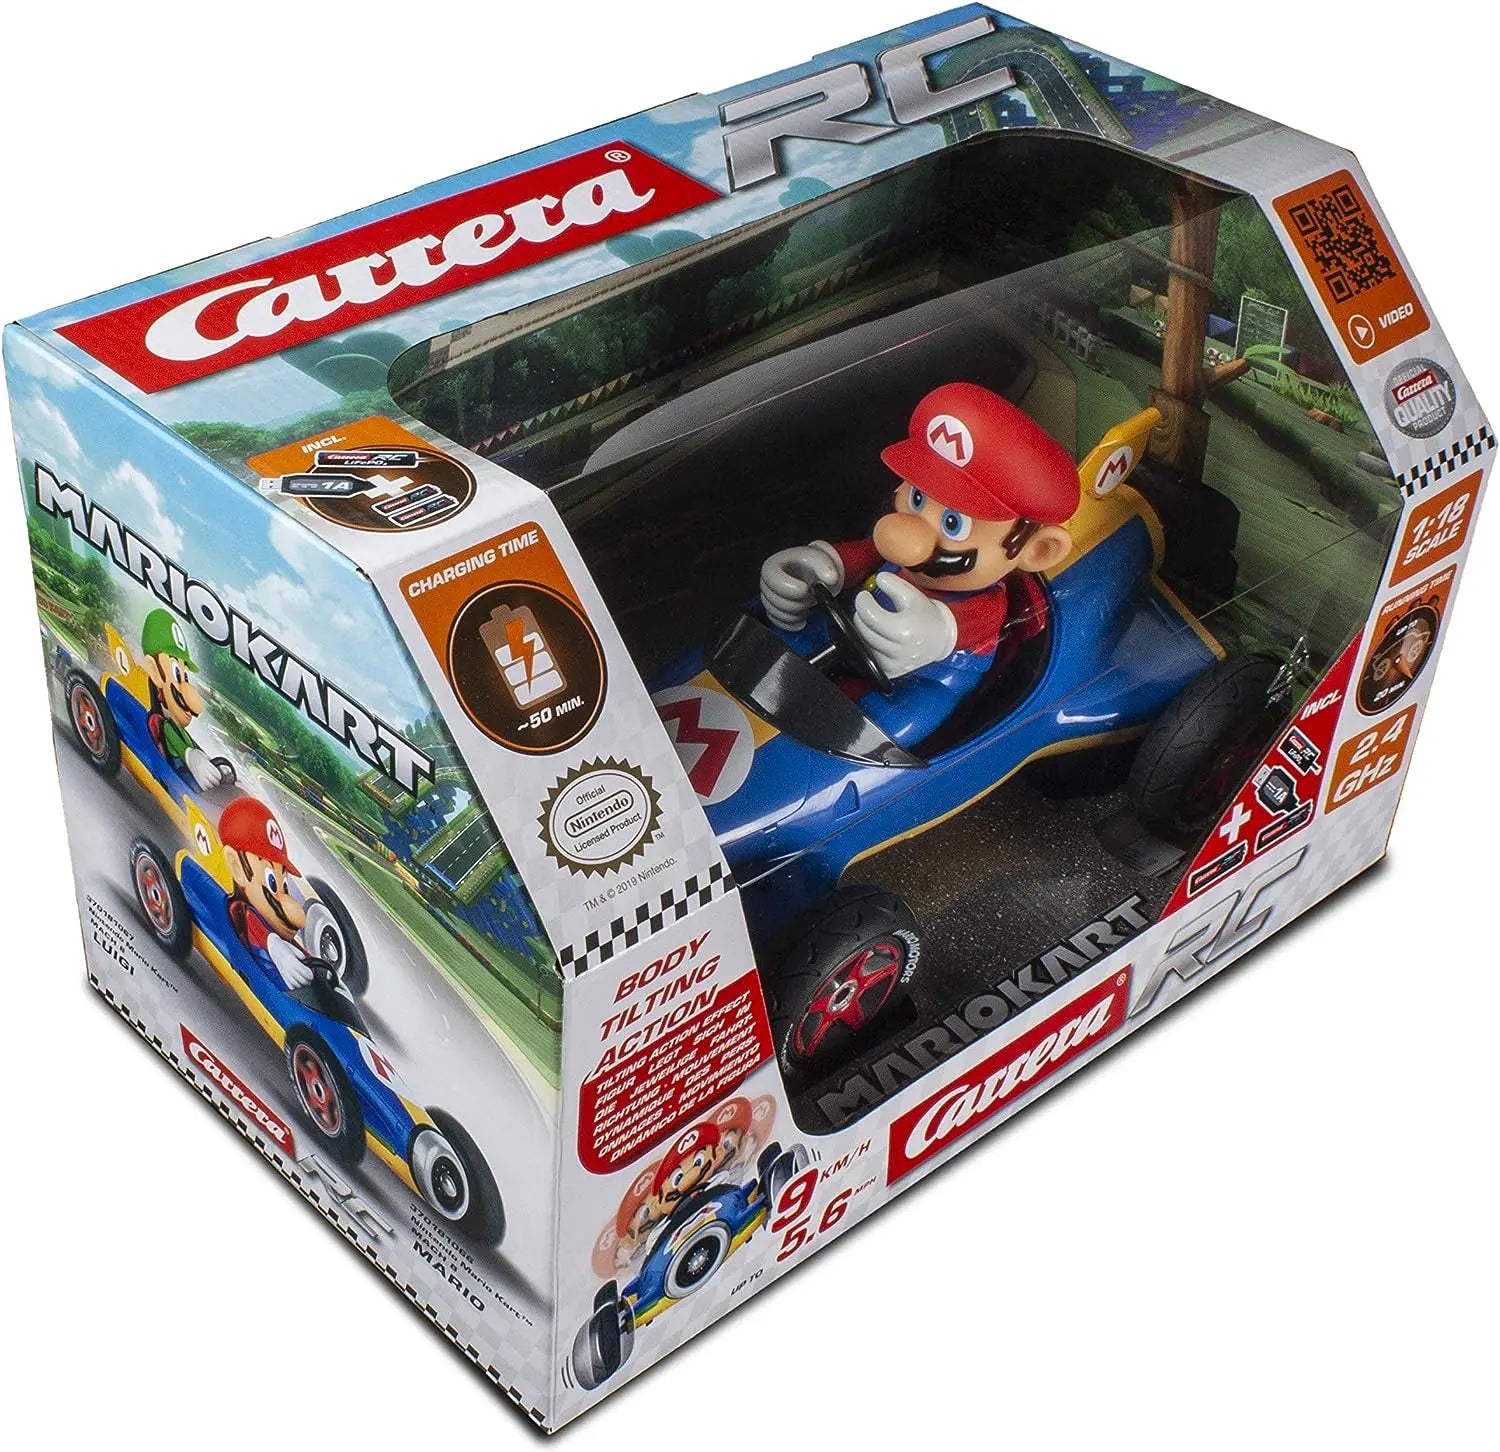 Carrera, Mario Kart (Ensemble à Batterie) —